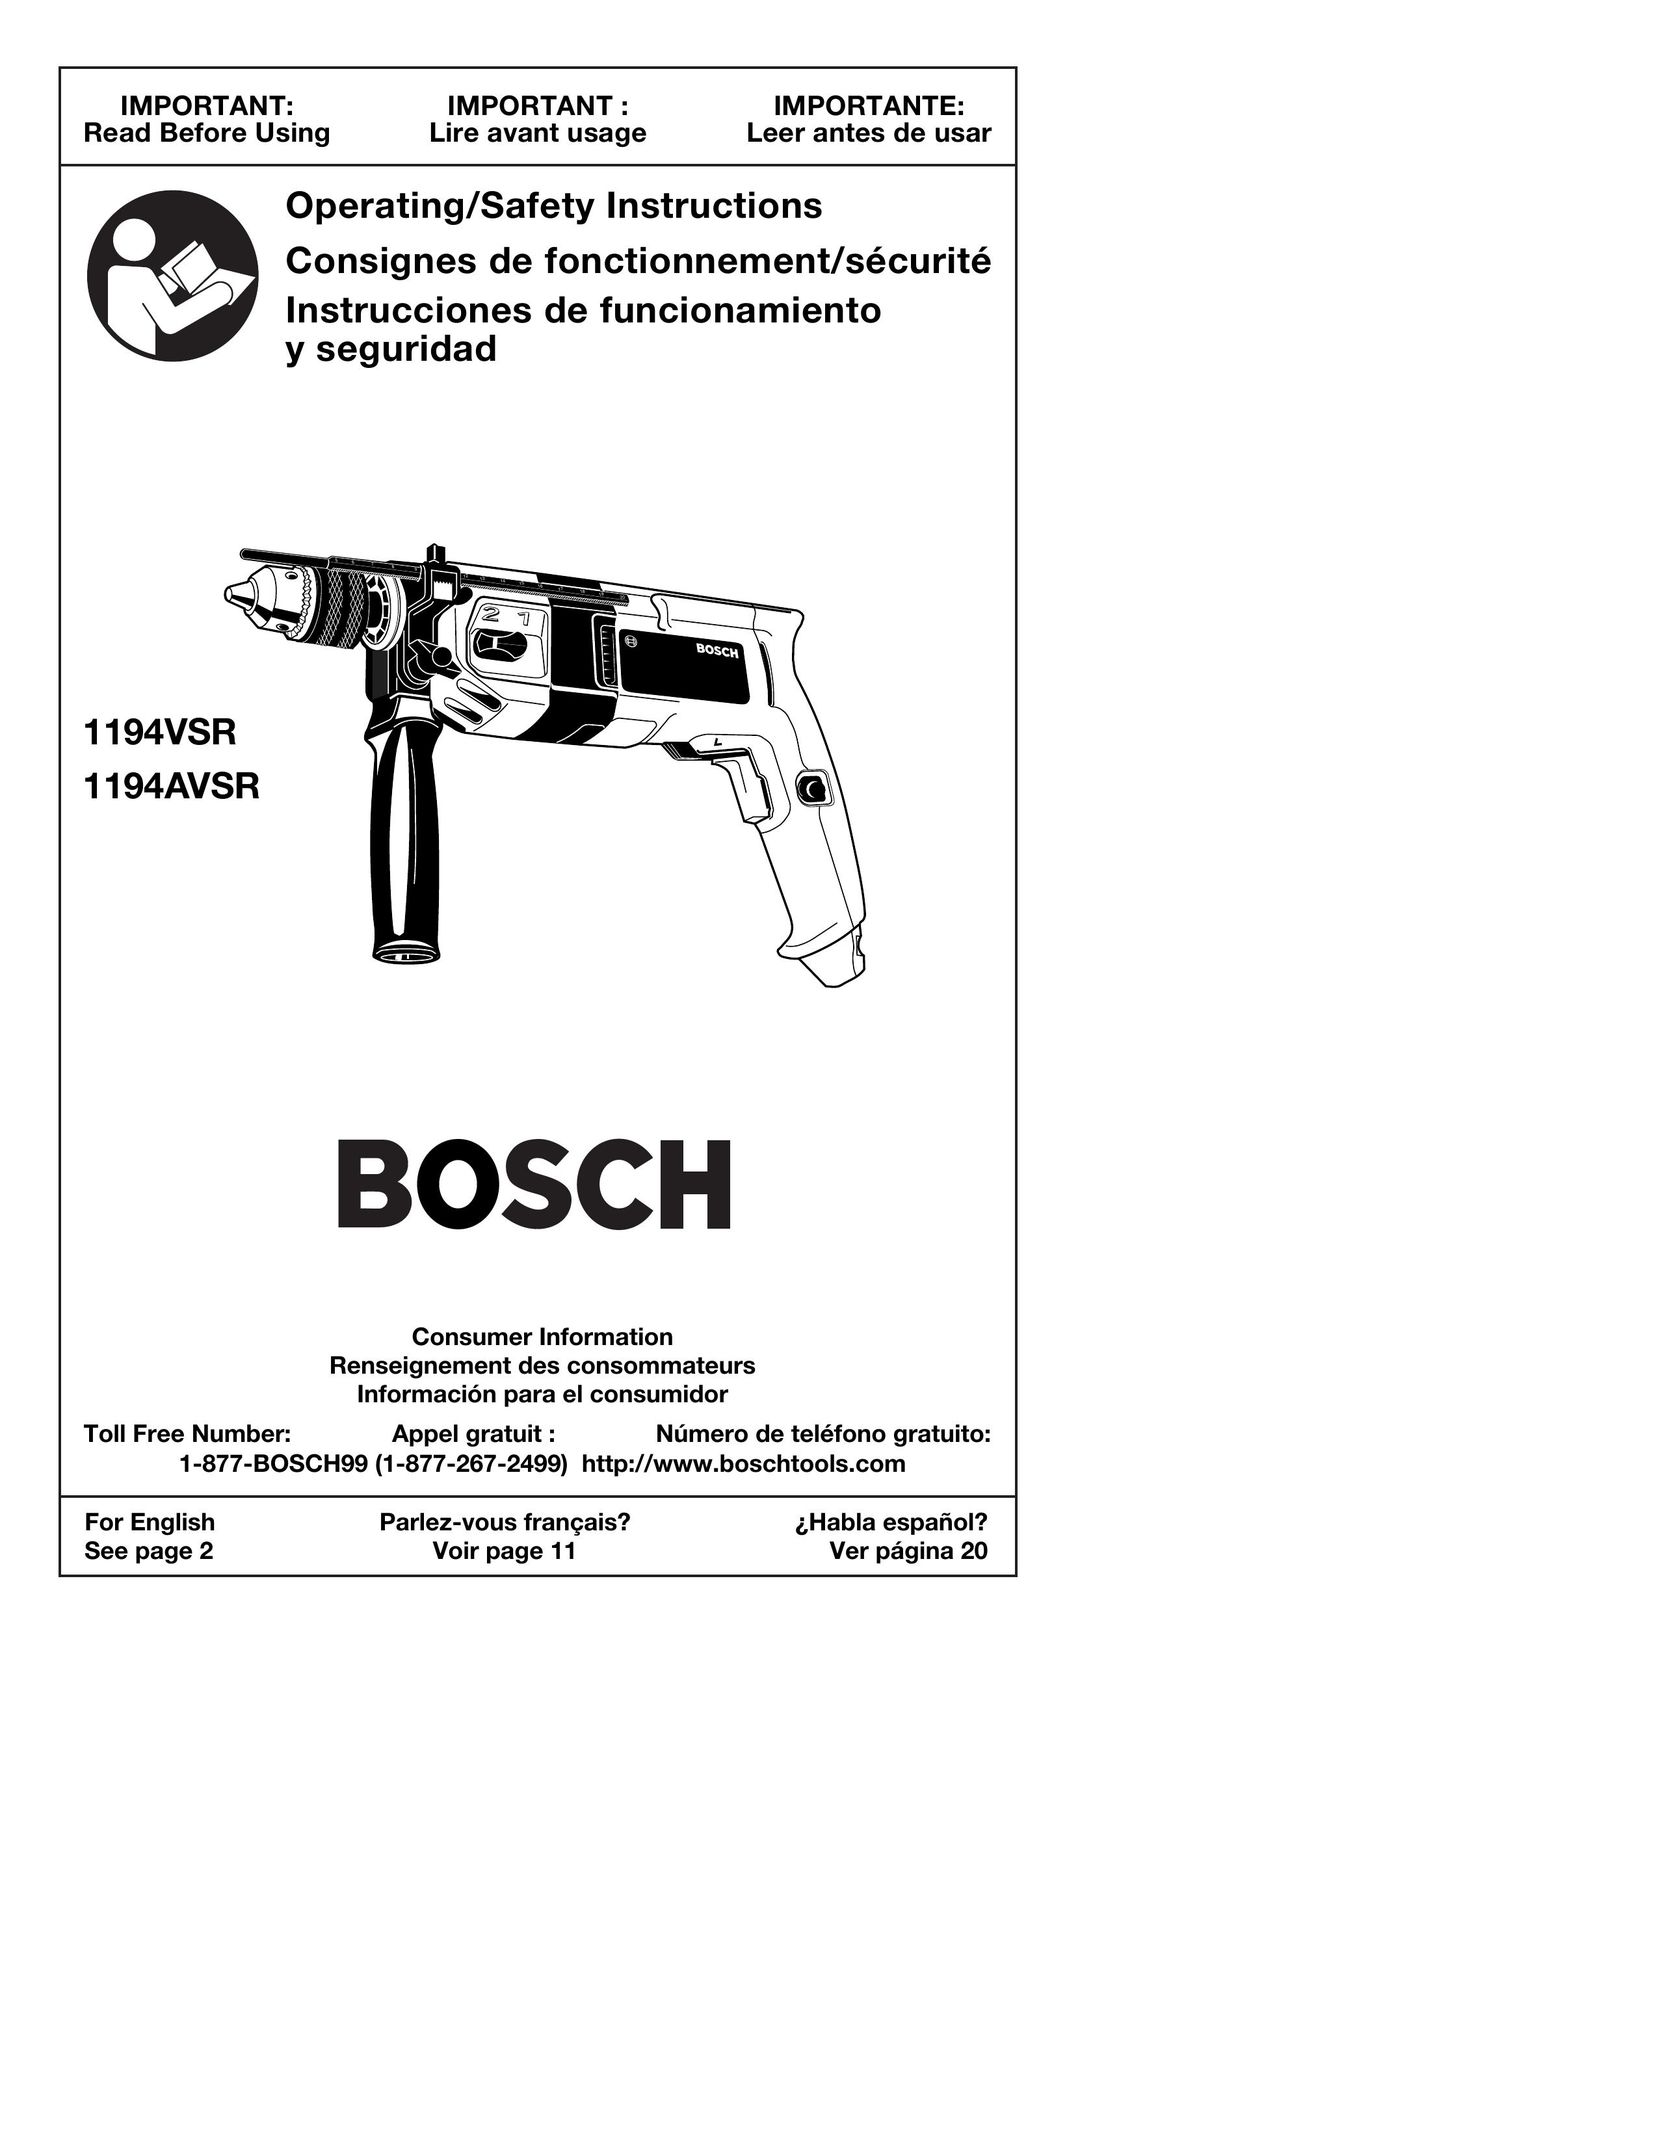 Bosch Power Tools 1194VSR Impact Driver User Manual